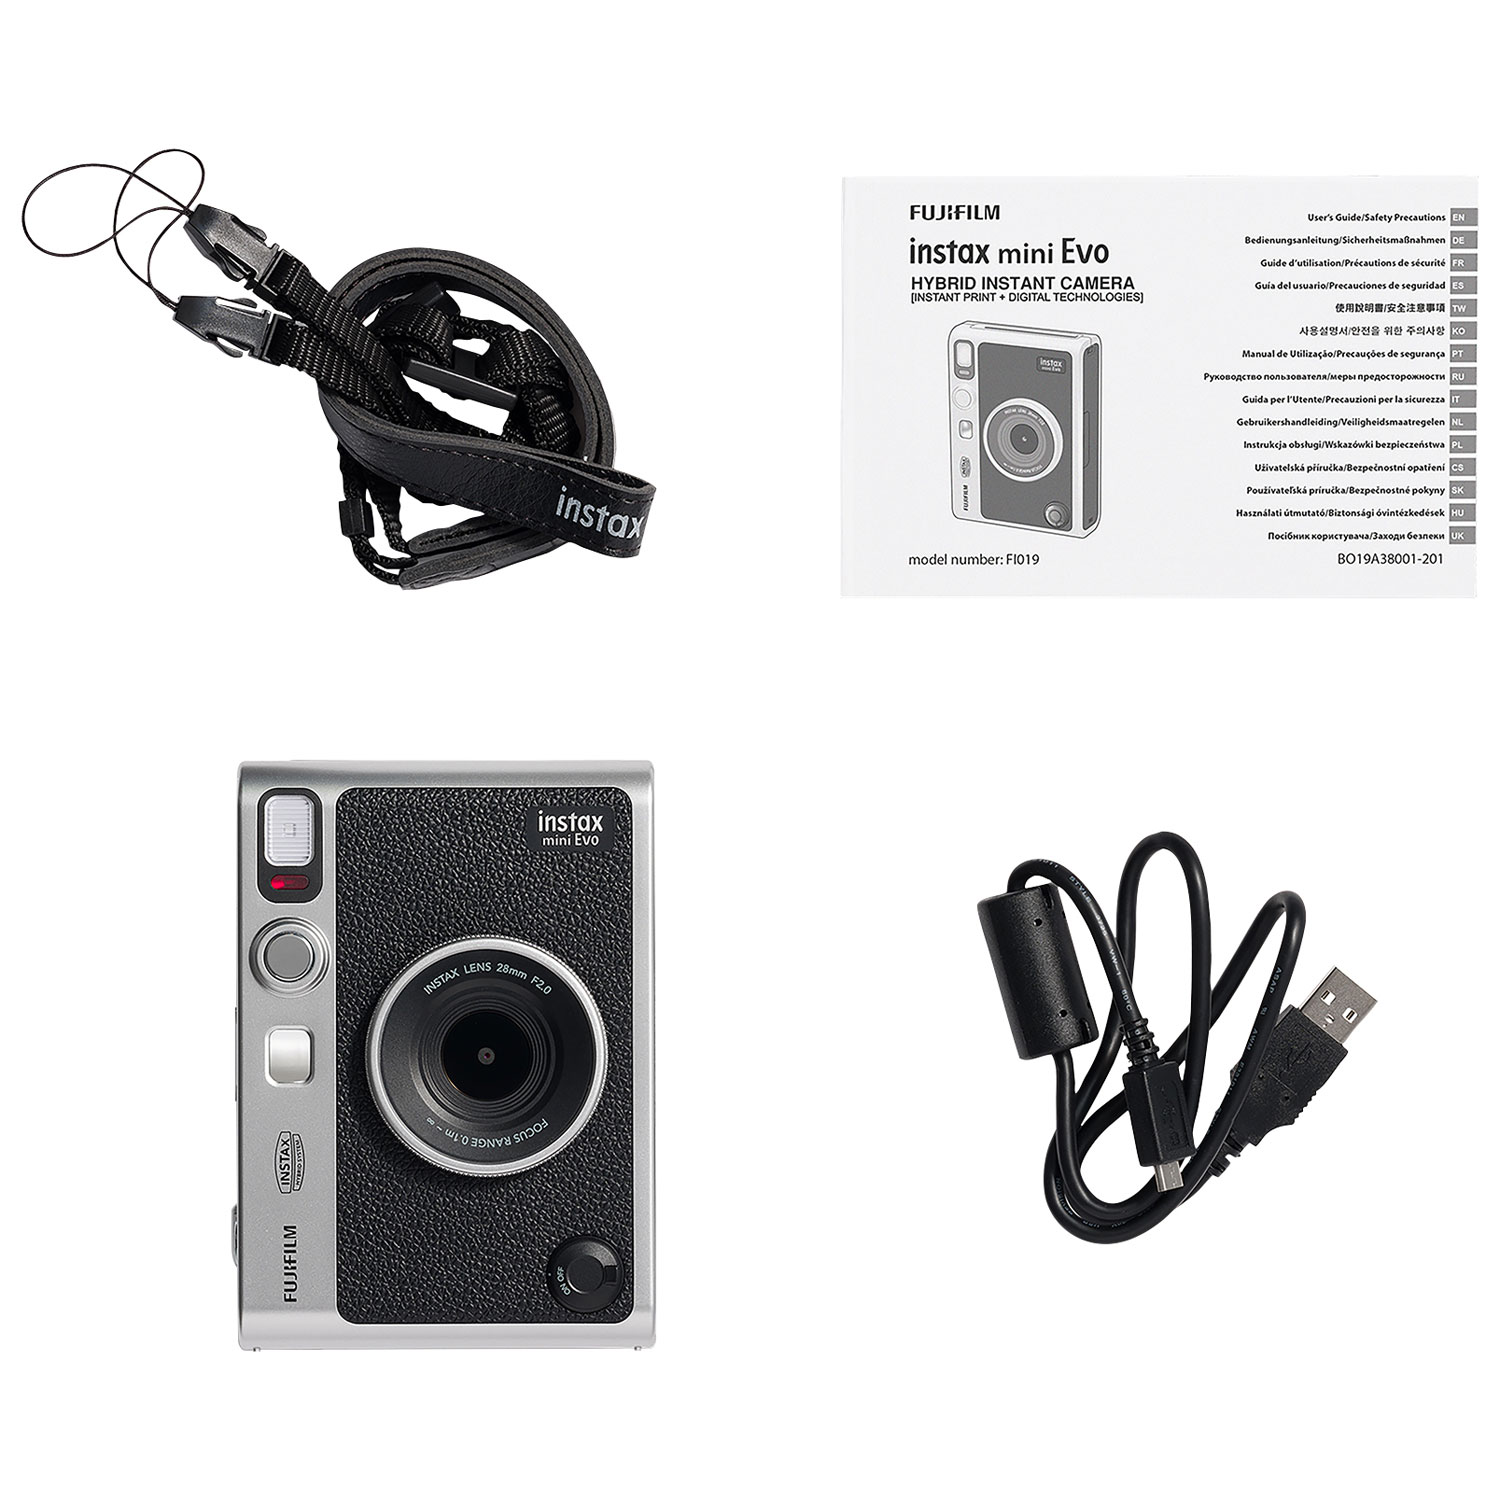 Fujifilm Instax mini Evo Instant Camera - Black | Best Buy Canada